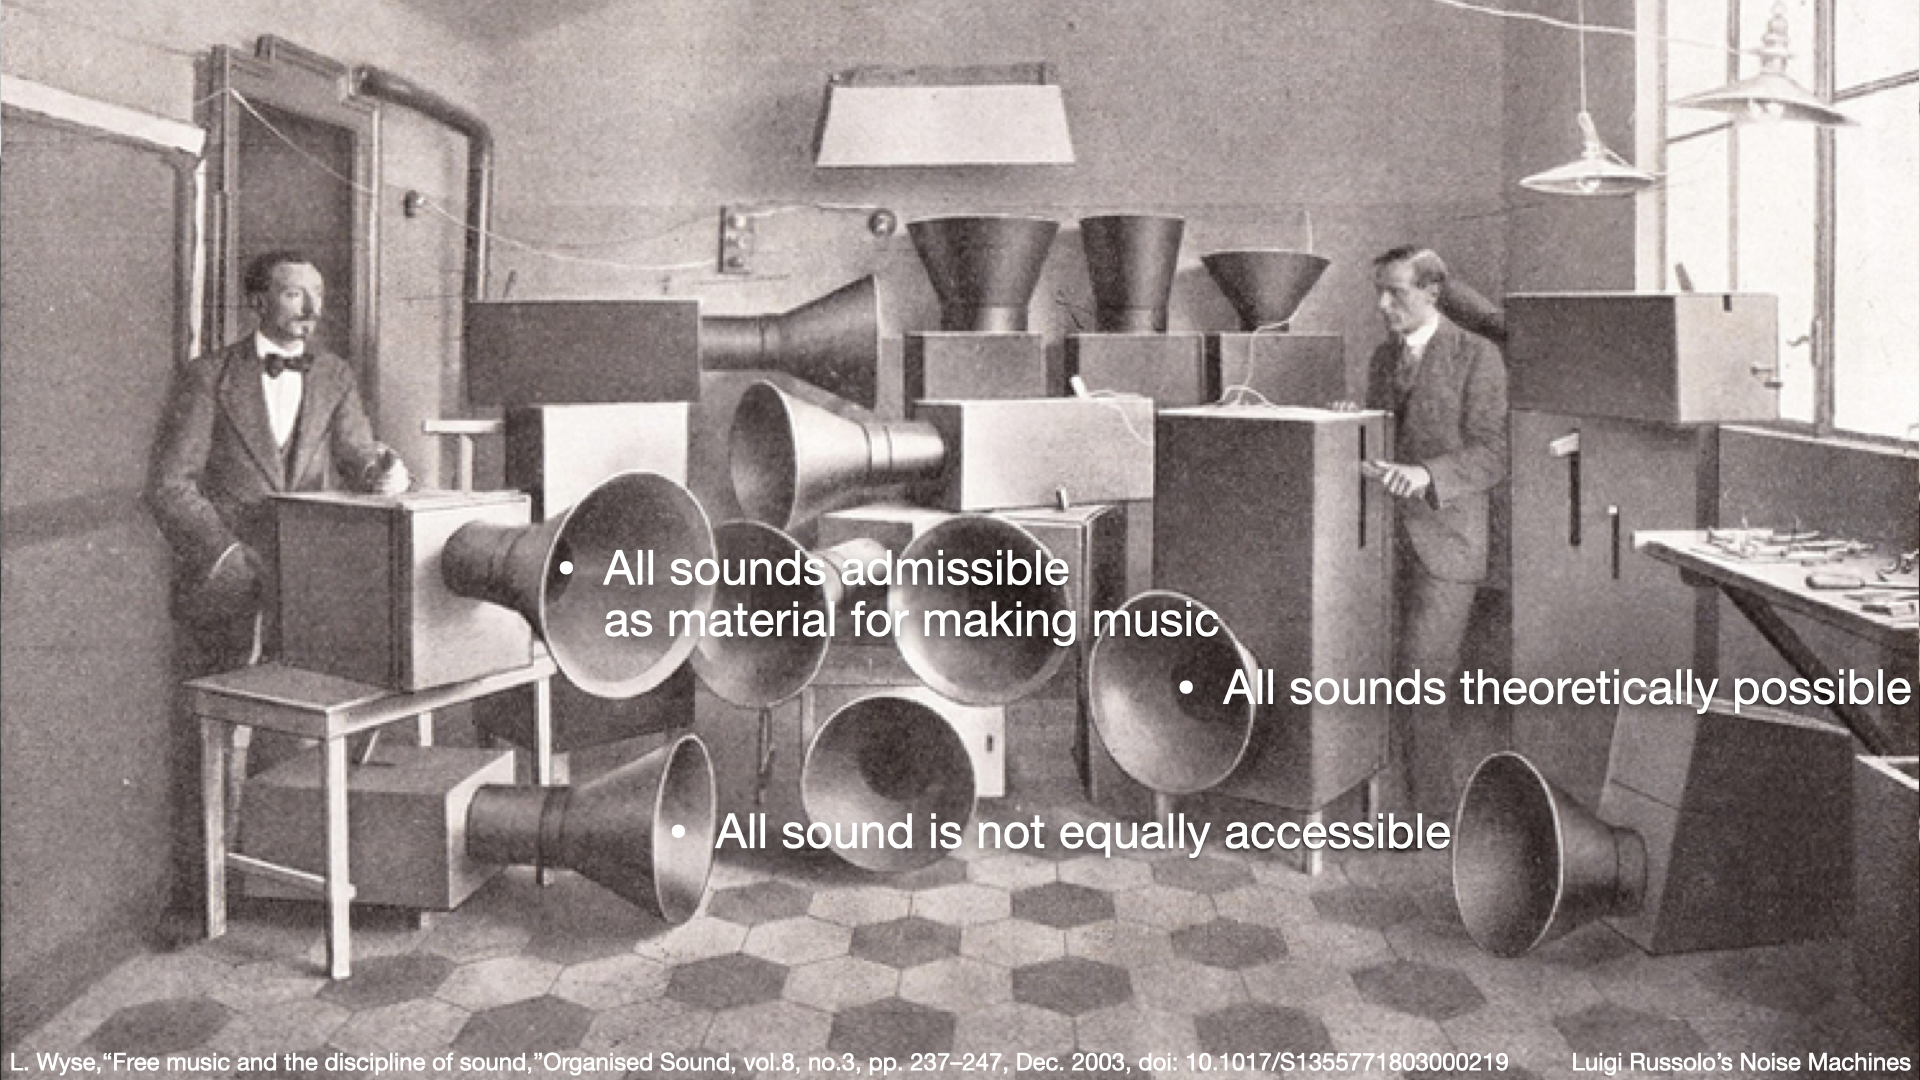 Luigi Russolo's Noise Machines.